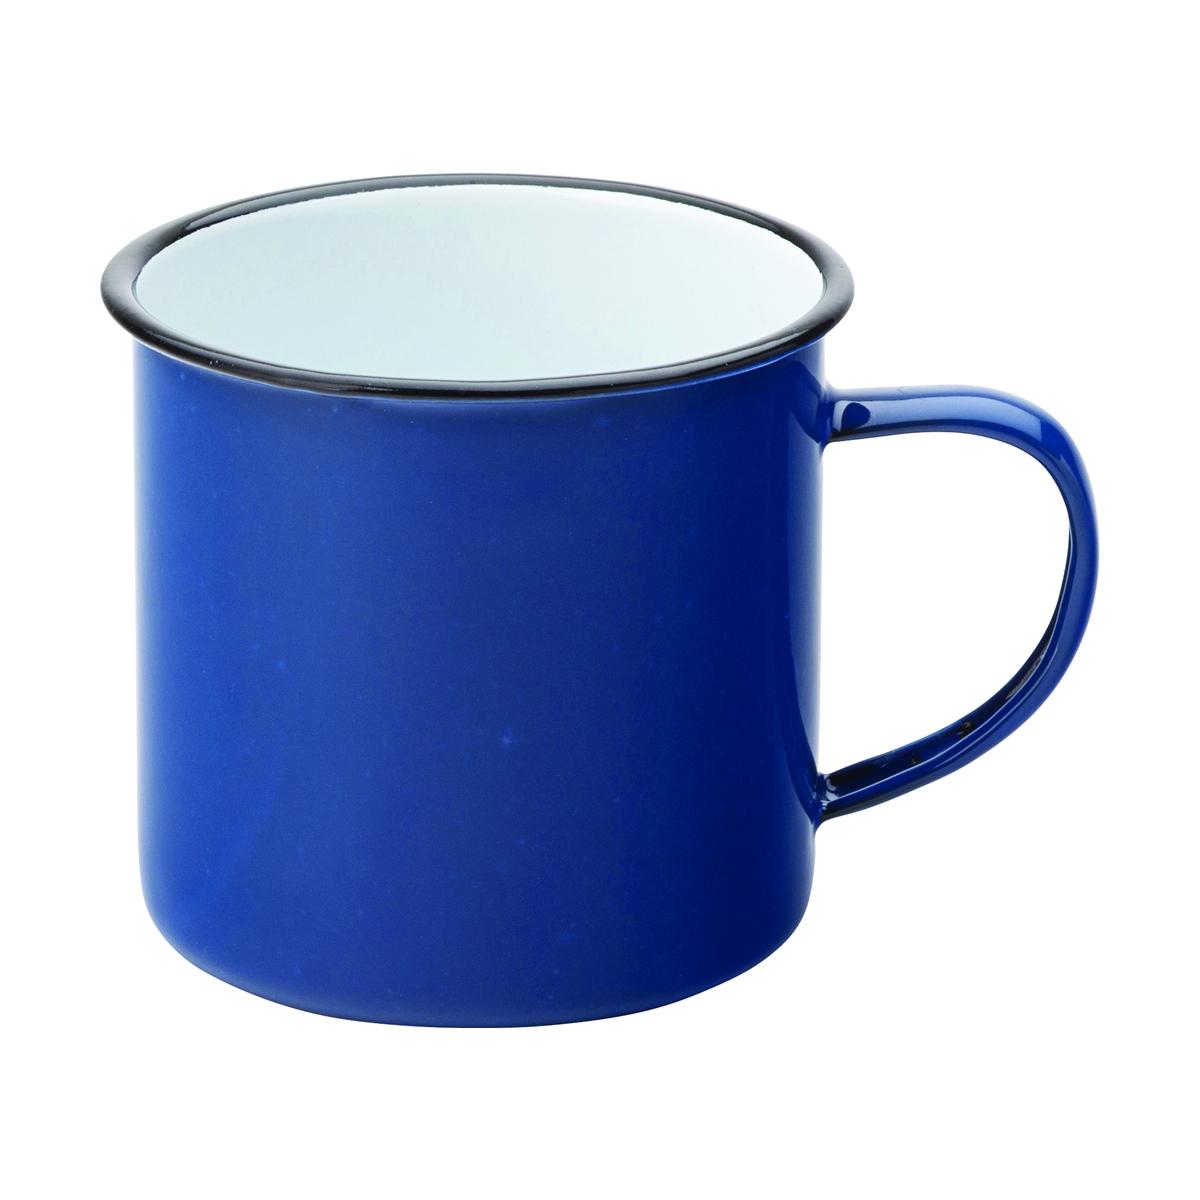 Enamel Mug Blue with Black Rim 520ml